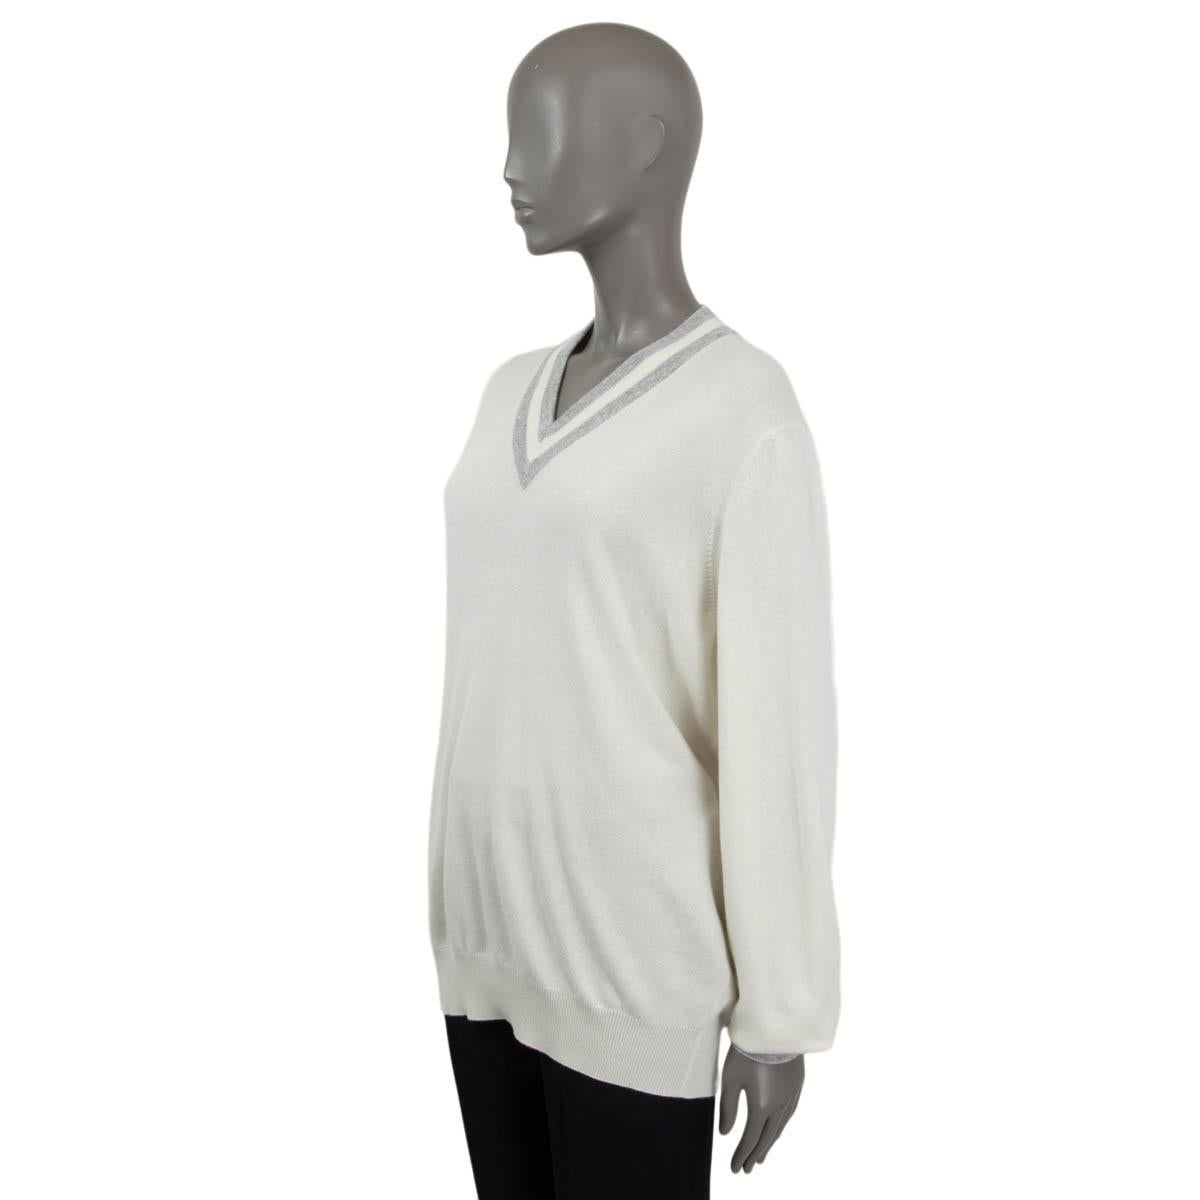 white v neck sweater with black trim